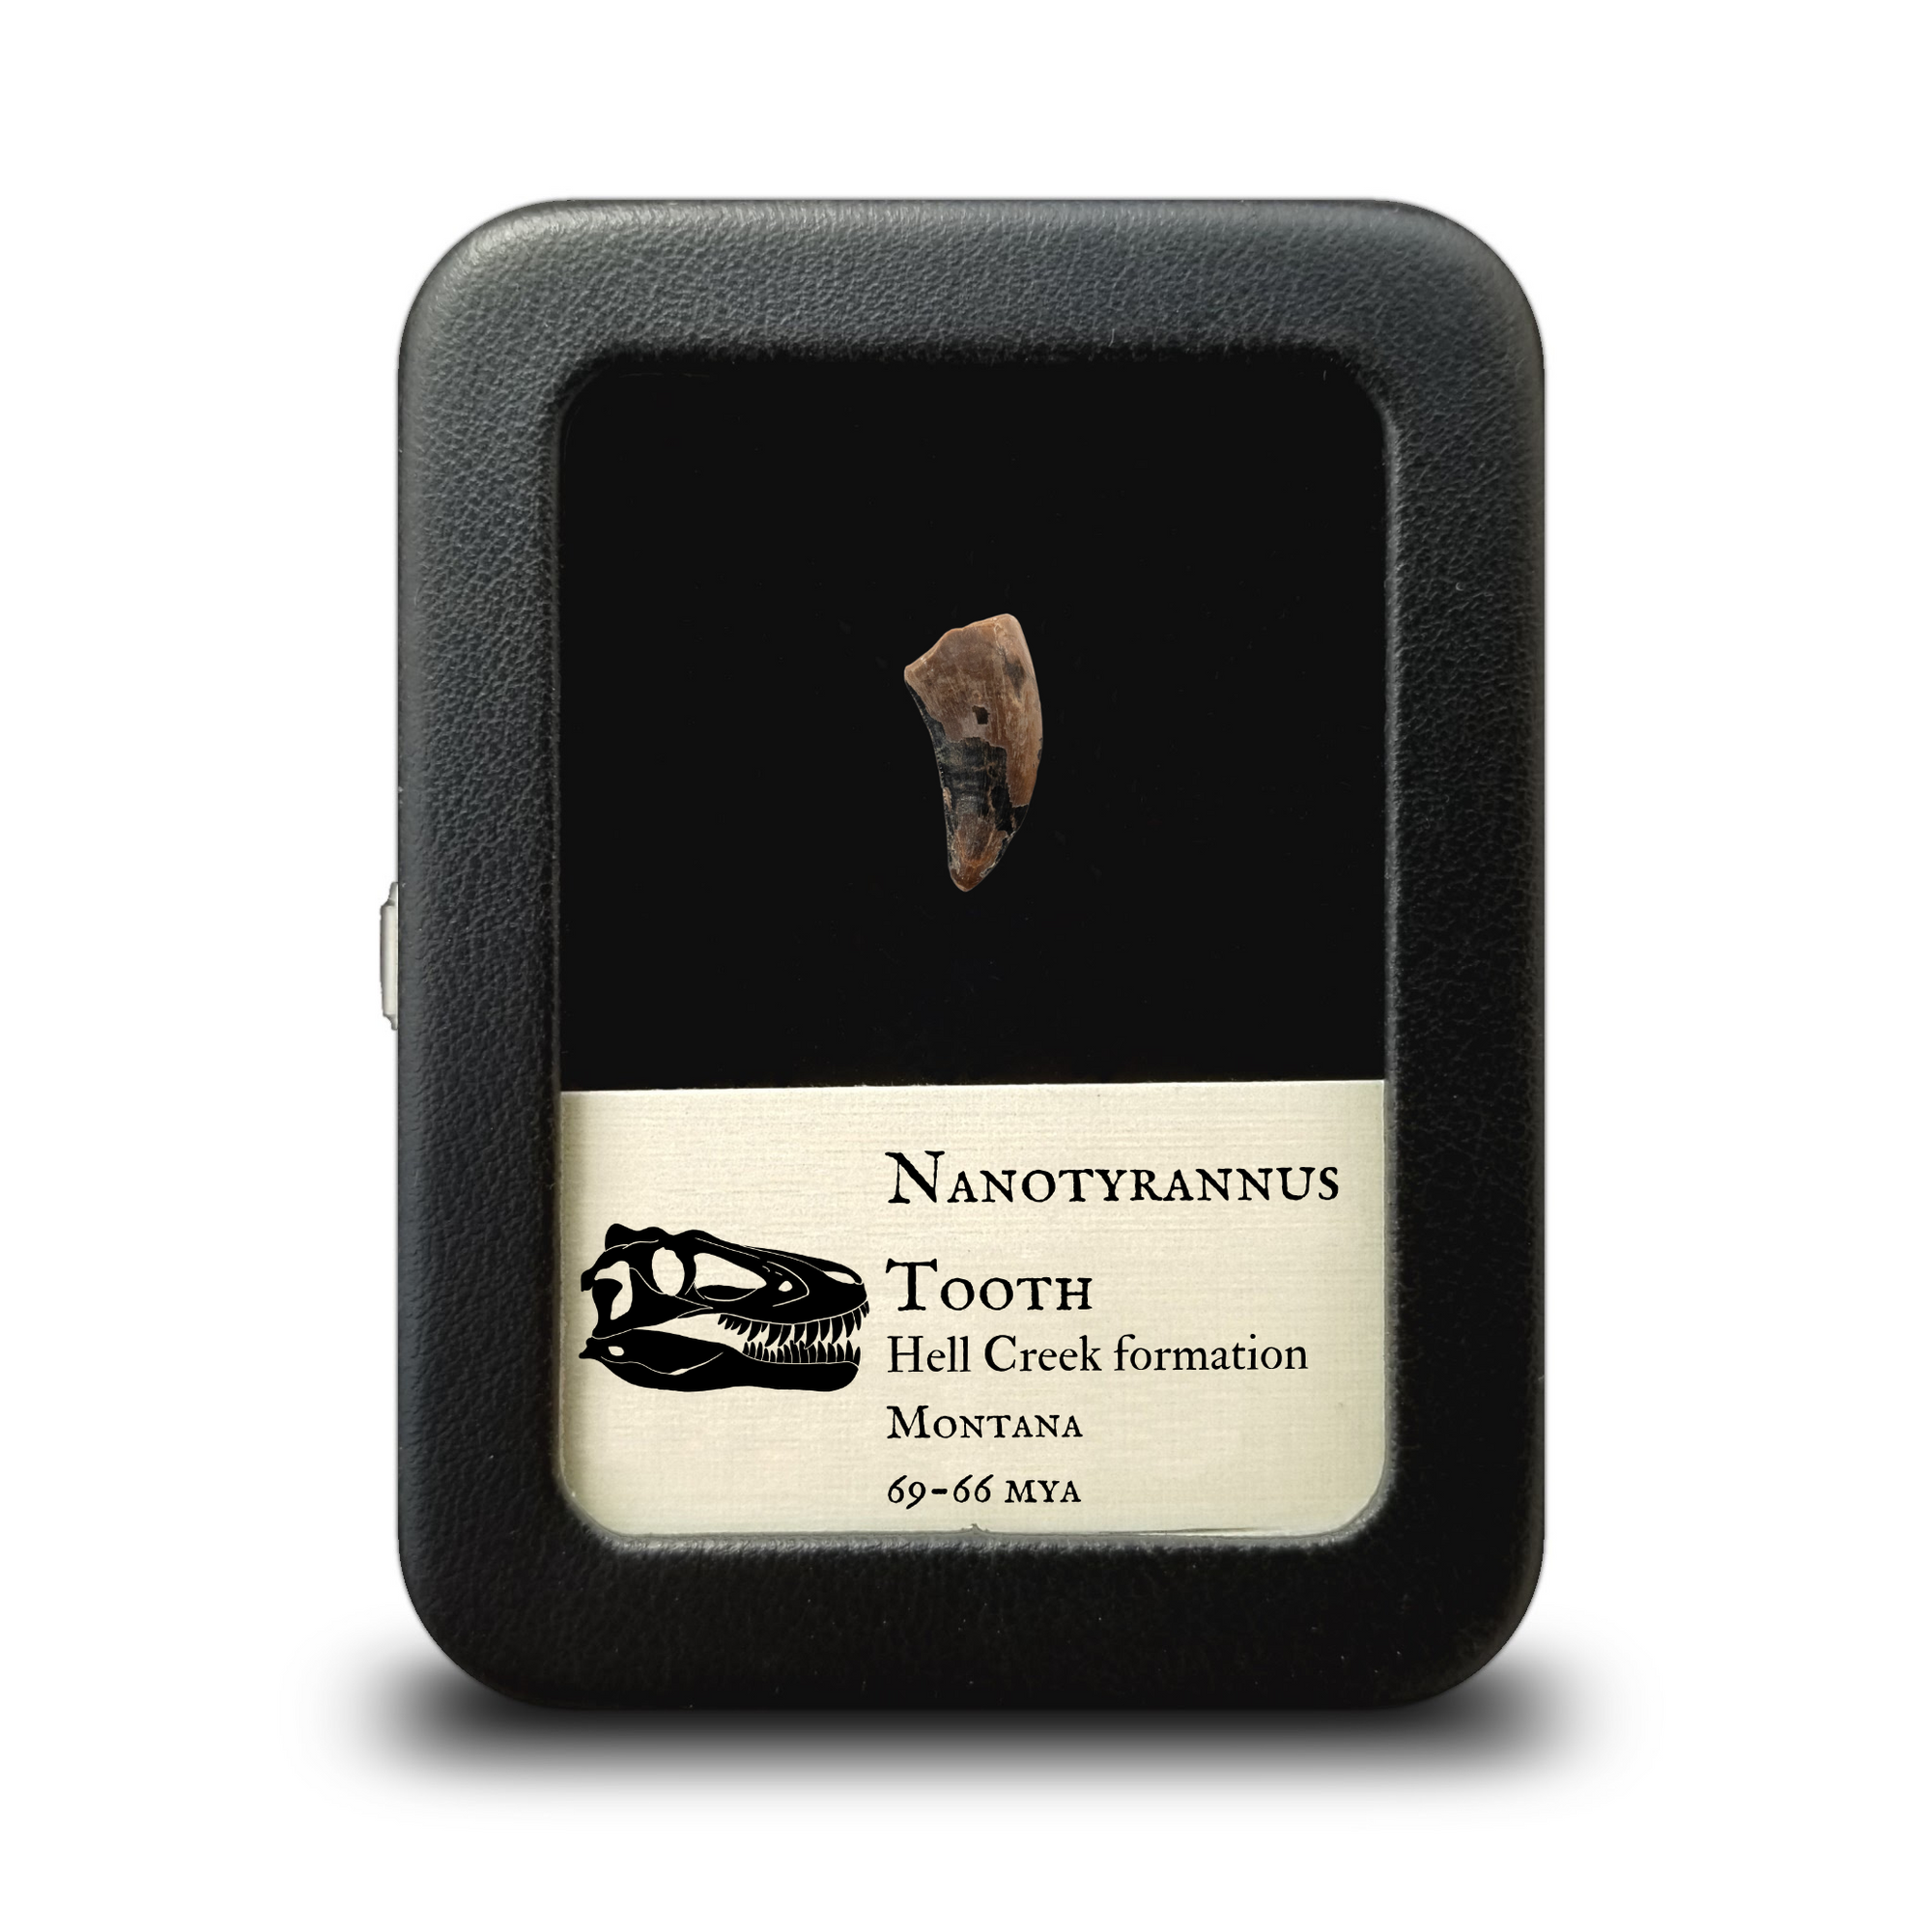 Nanotyrannus Tooth,  22 mm long - Cretaceous Period - 68 to 66 MYA - Montana, USA